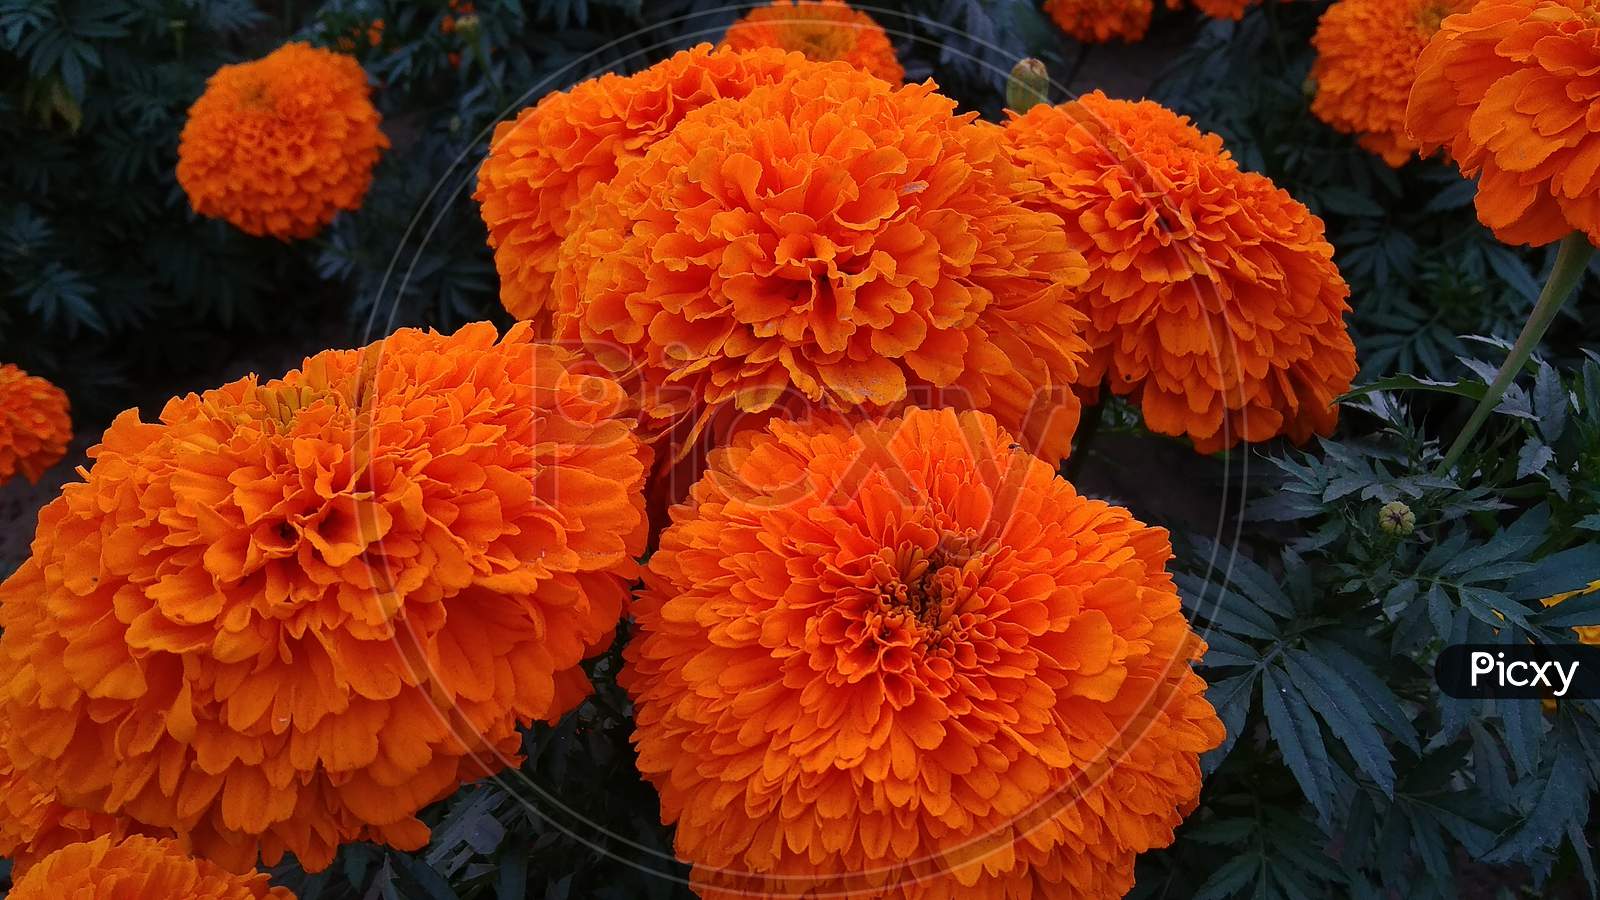 Orenge english marigold petal flowering plant in focus